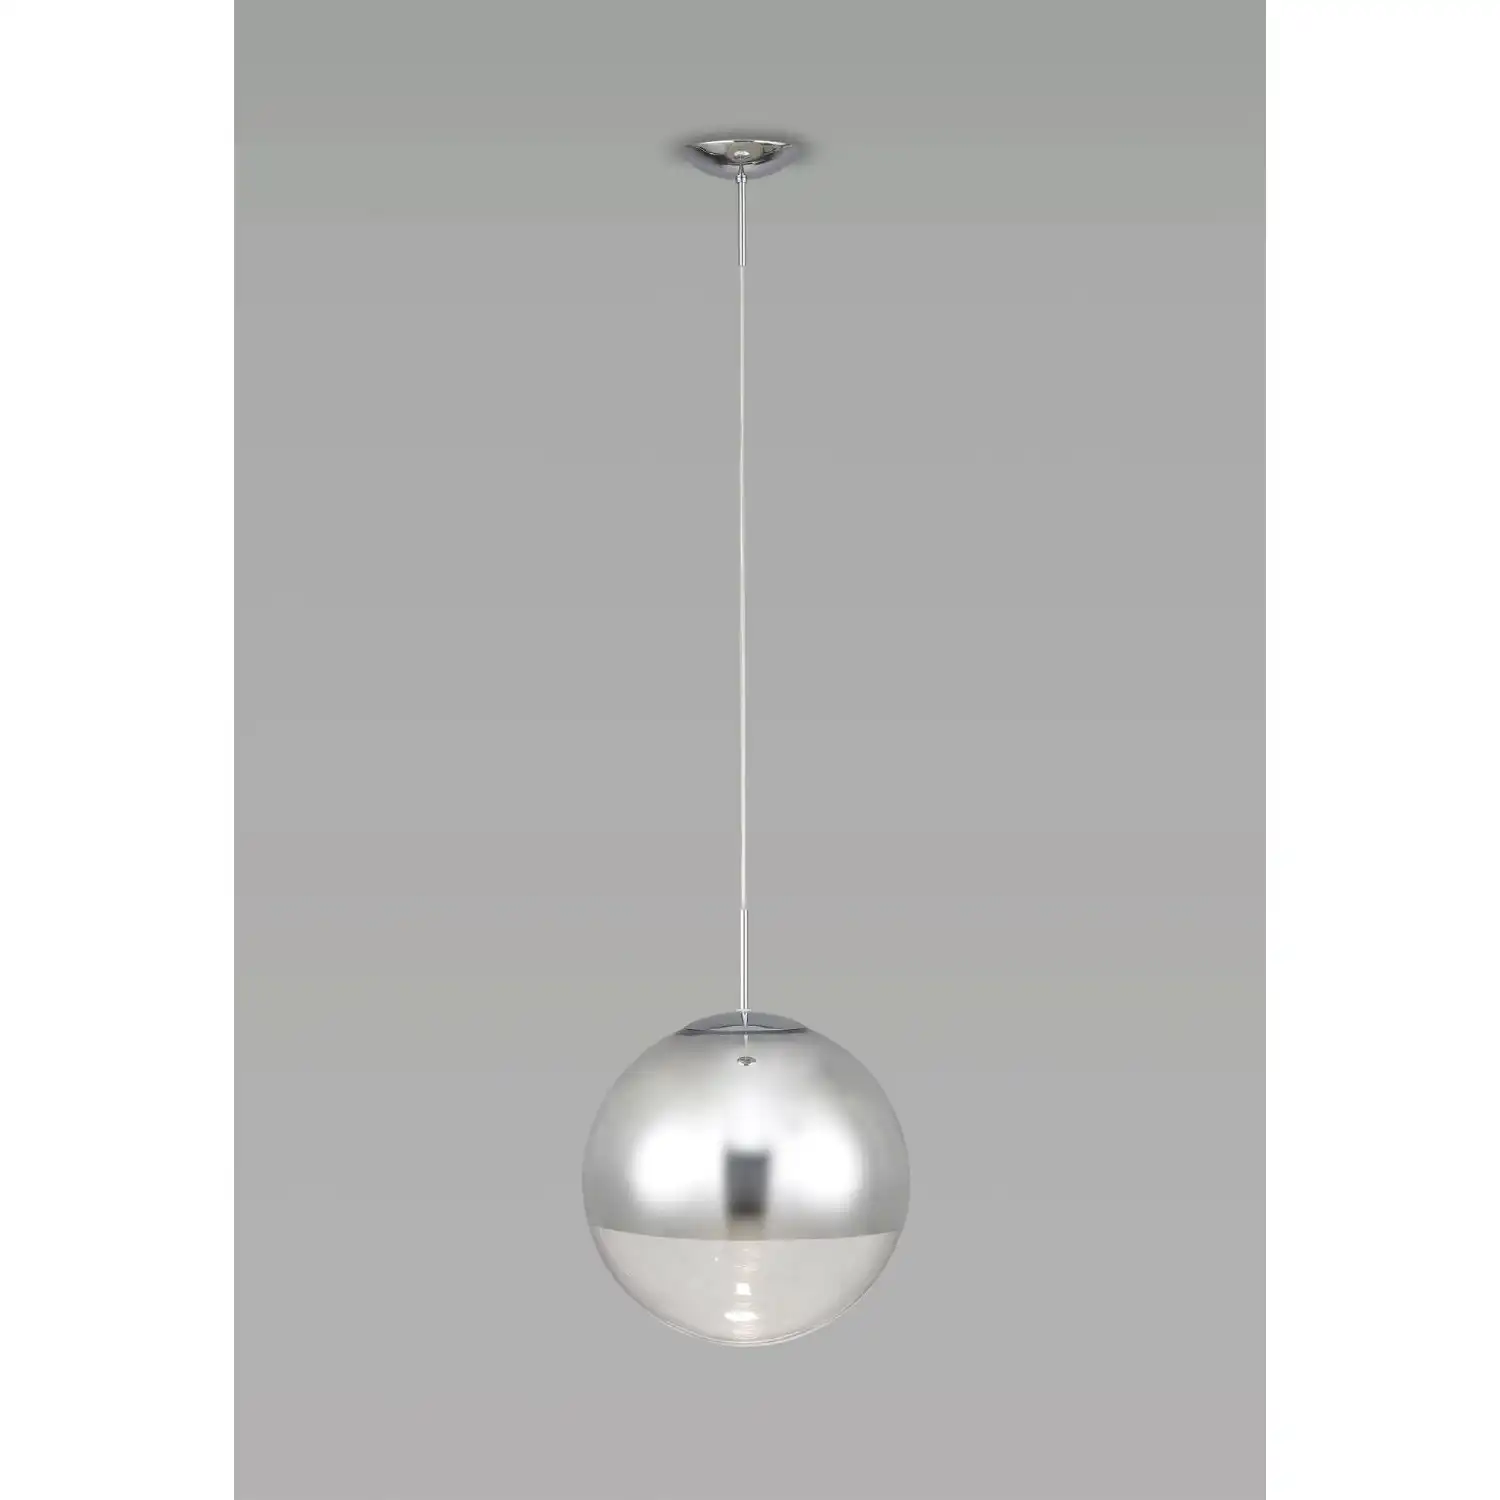 Miranda Small Ball Pendant 1 Light E27 Polished Chrome Suspension With Mirrored Clear Glass Globe